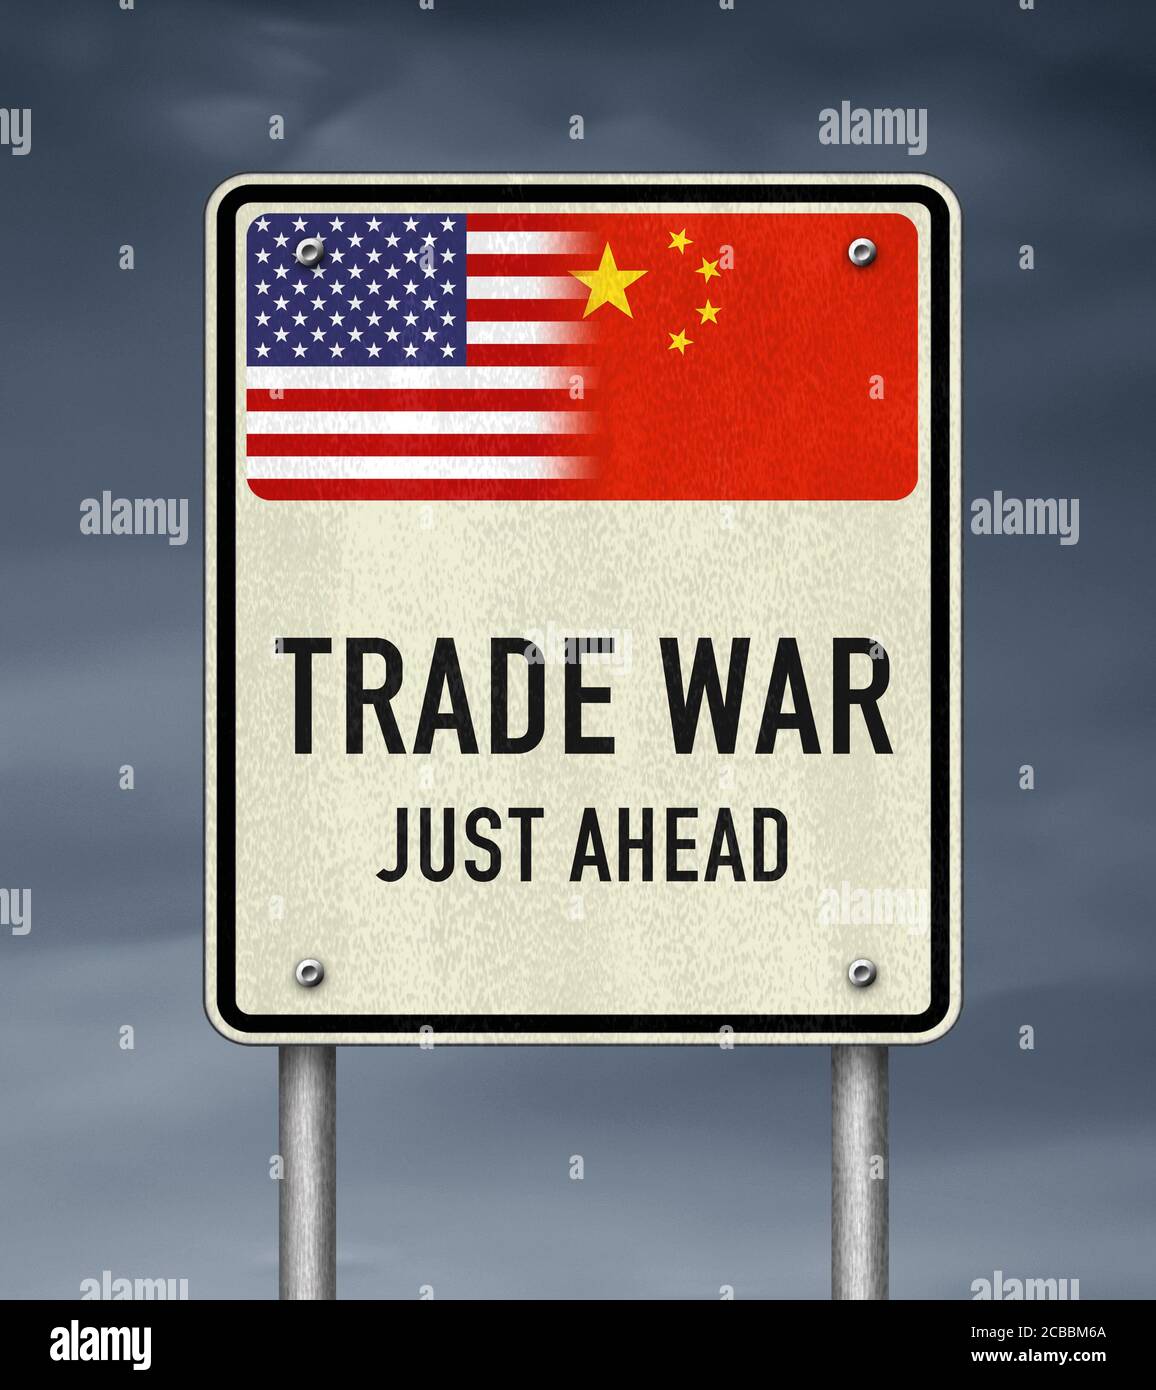 Trade war between United States and China Stock Photo